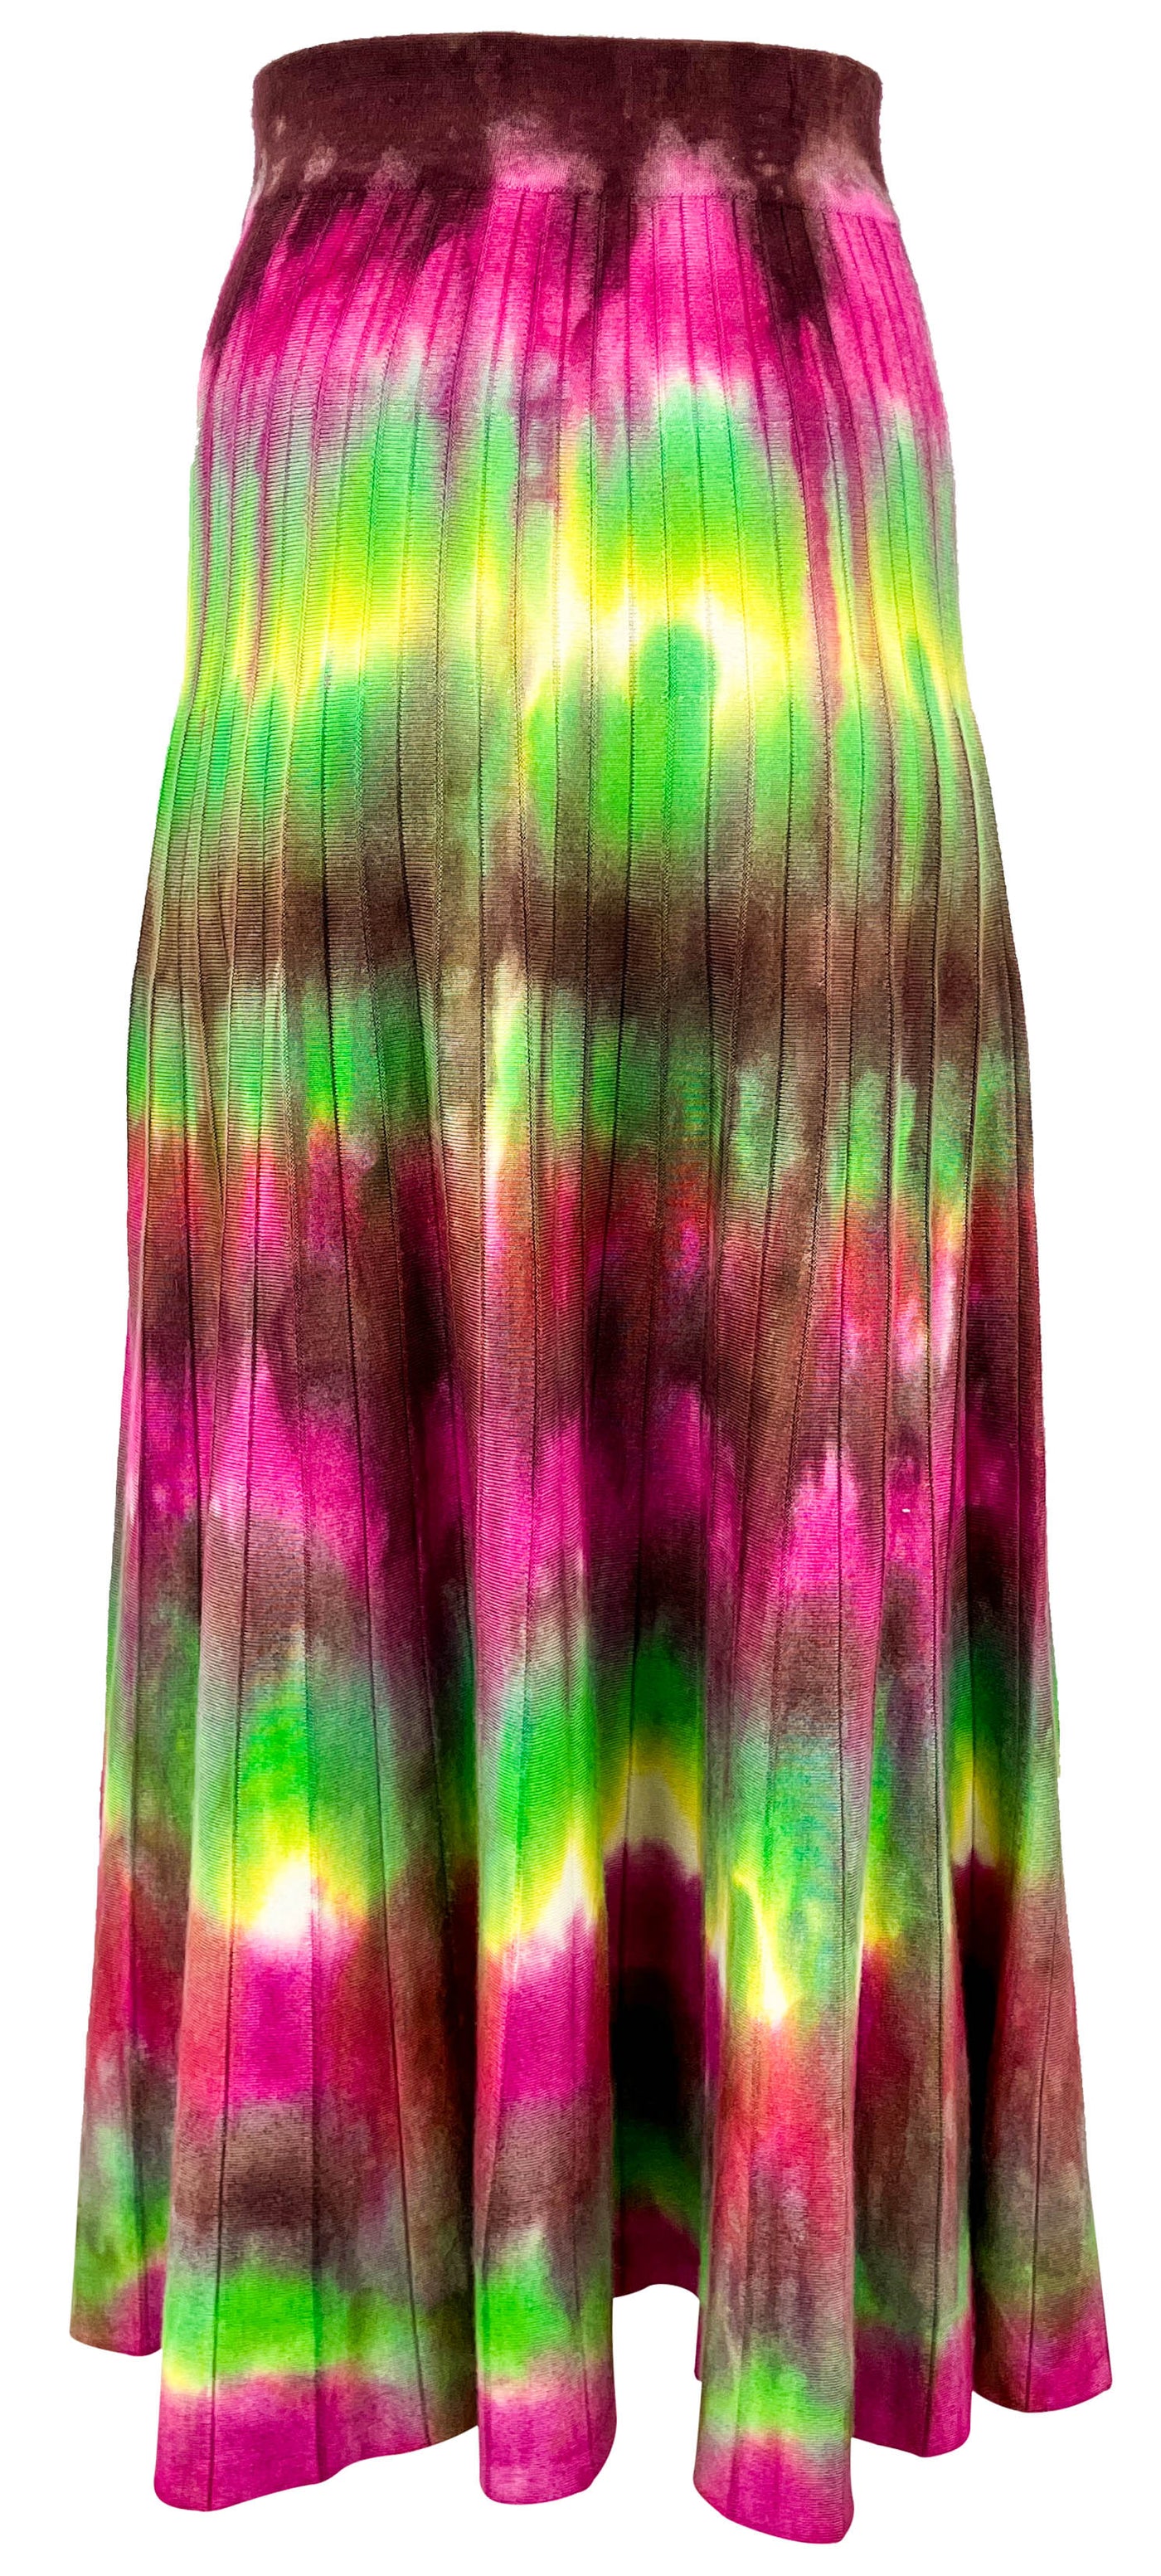 Gabriela Hearst Ella Skirt in Jewel Tie-Dye - Discounts on Gabriela Hearst at UAL